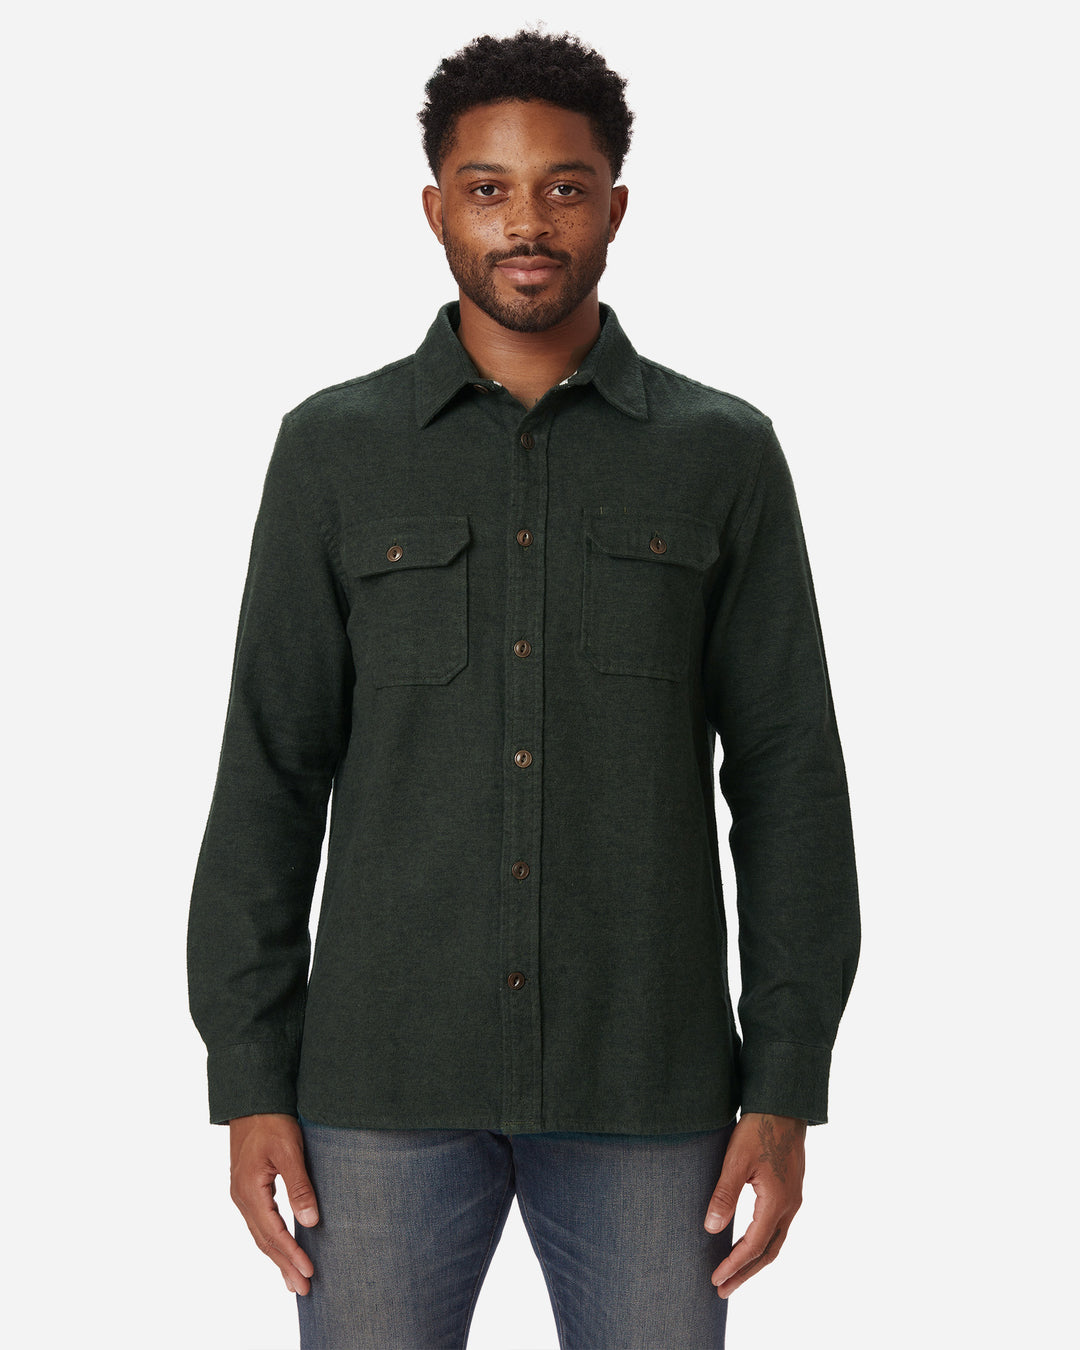 Flannel - Utility Shirt - Twisted Sage